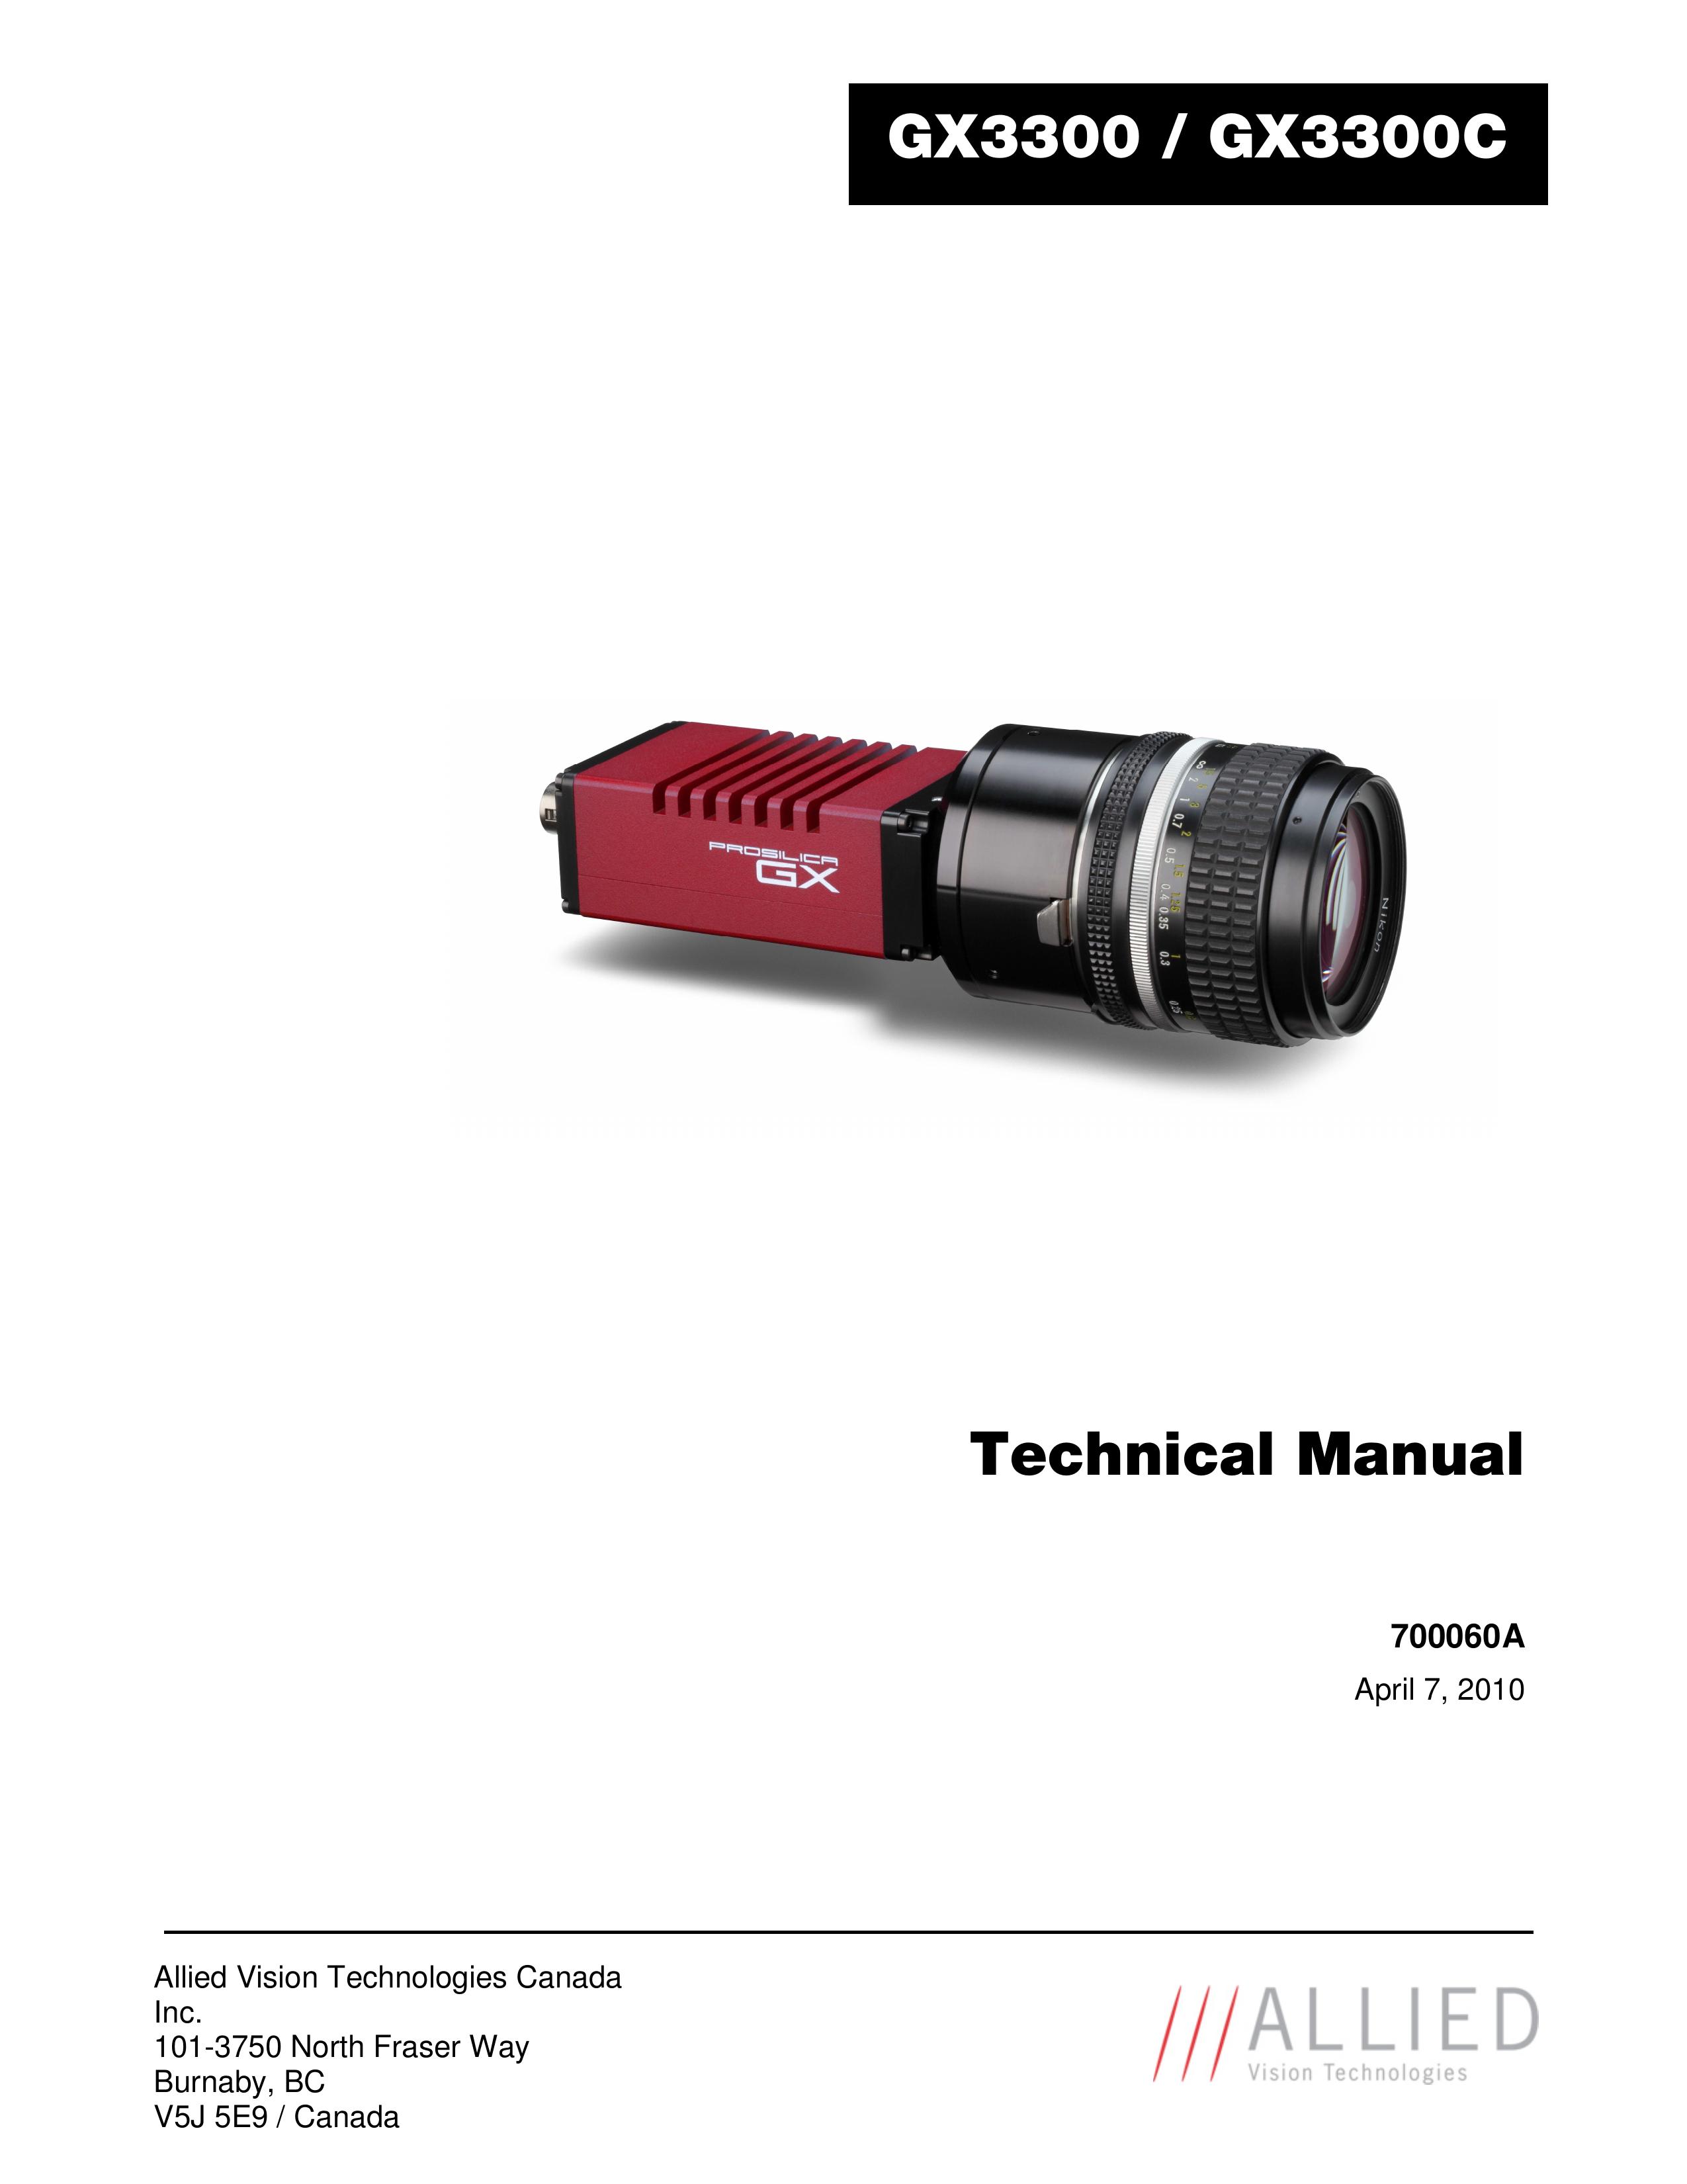 Allied International GX3300 Digital Camera User Manual